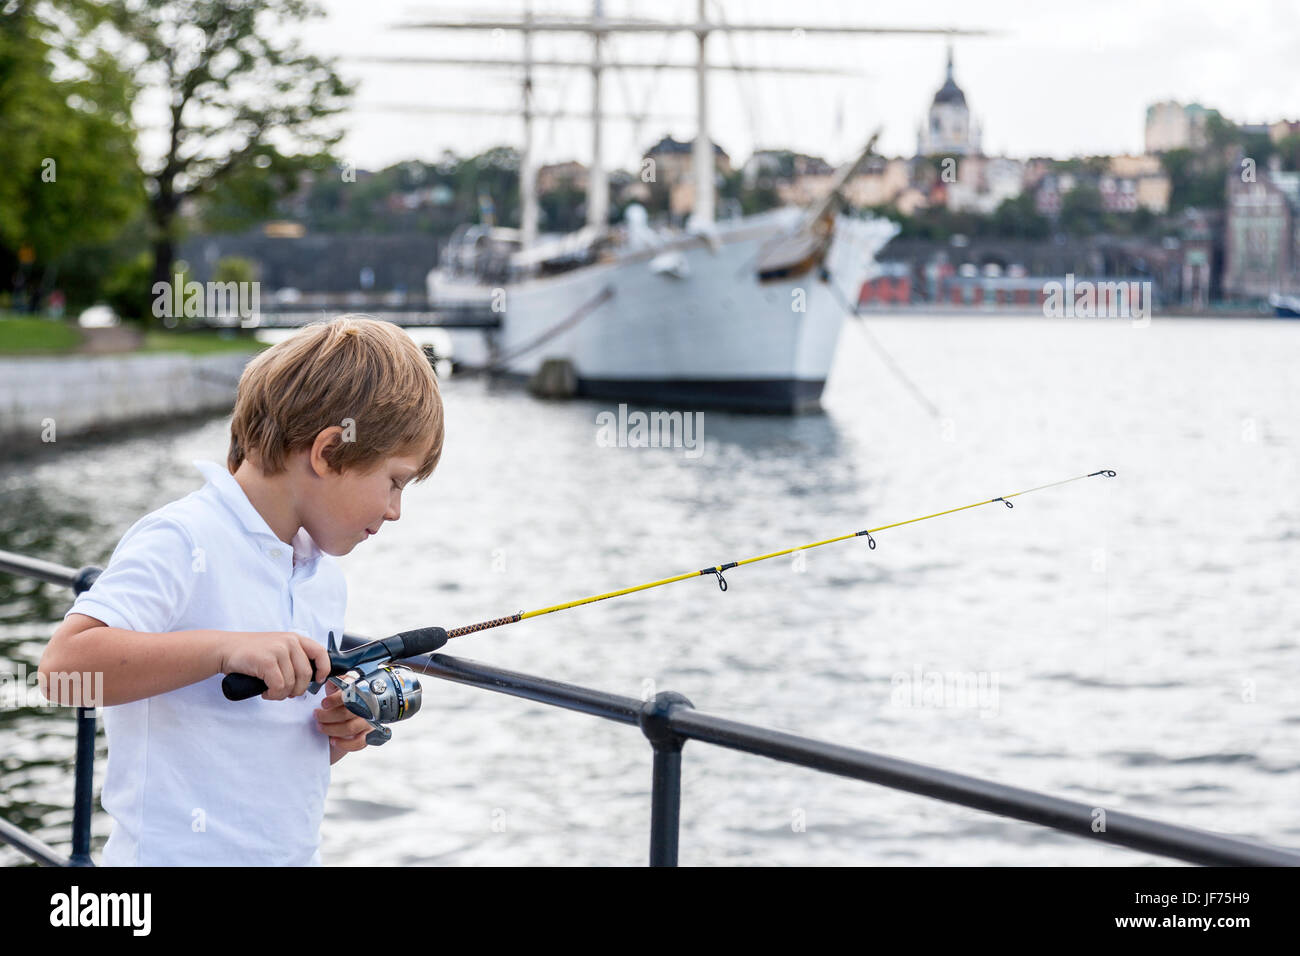 Boy fishing in city Stock Photo